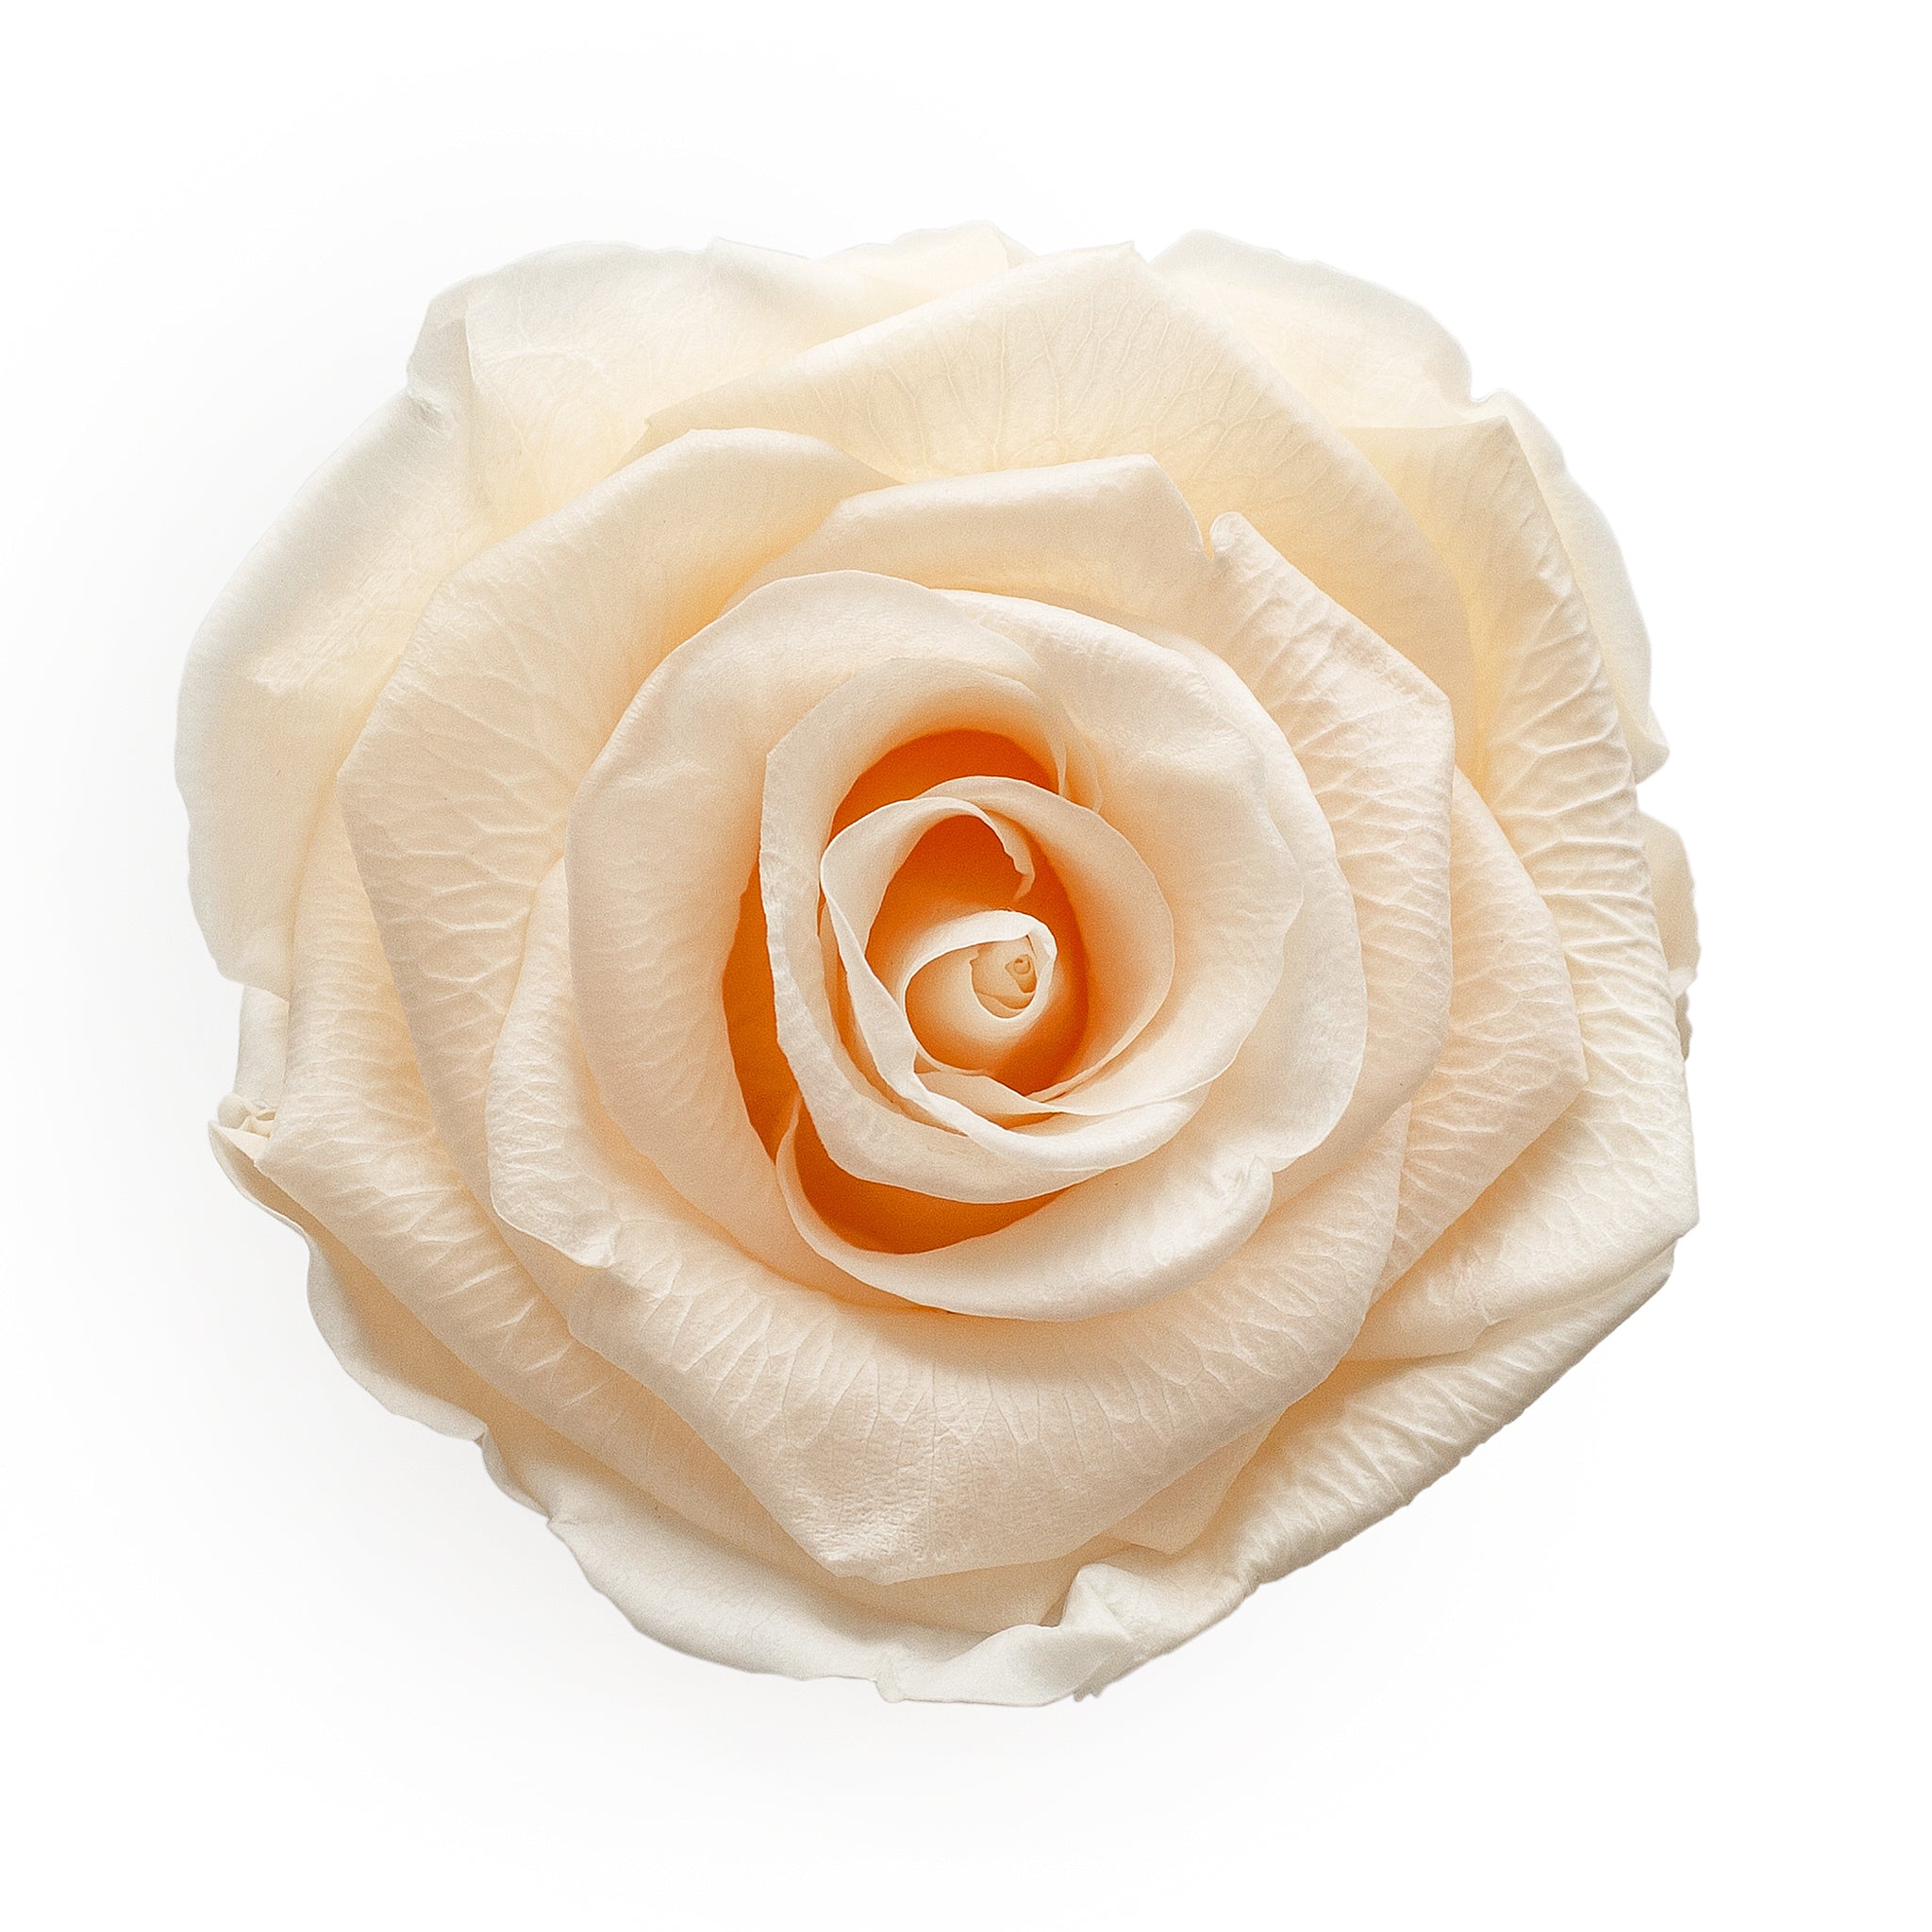 Forever Roses &amp; große weiße runde Hutschachtel